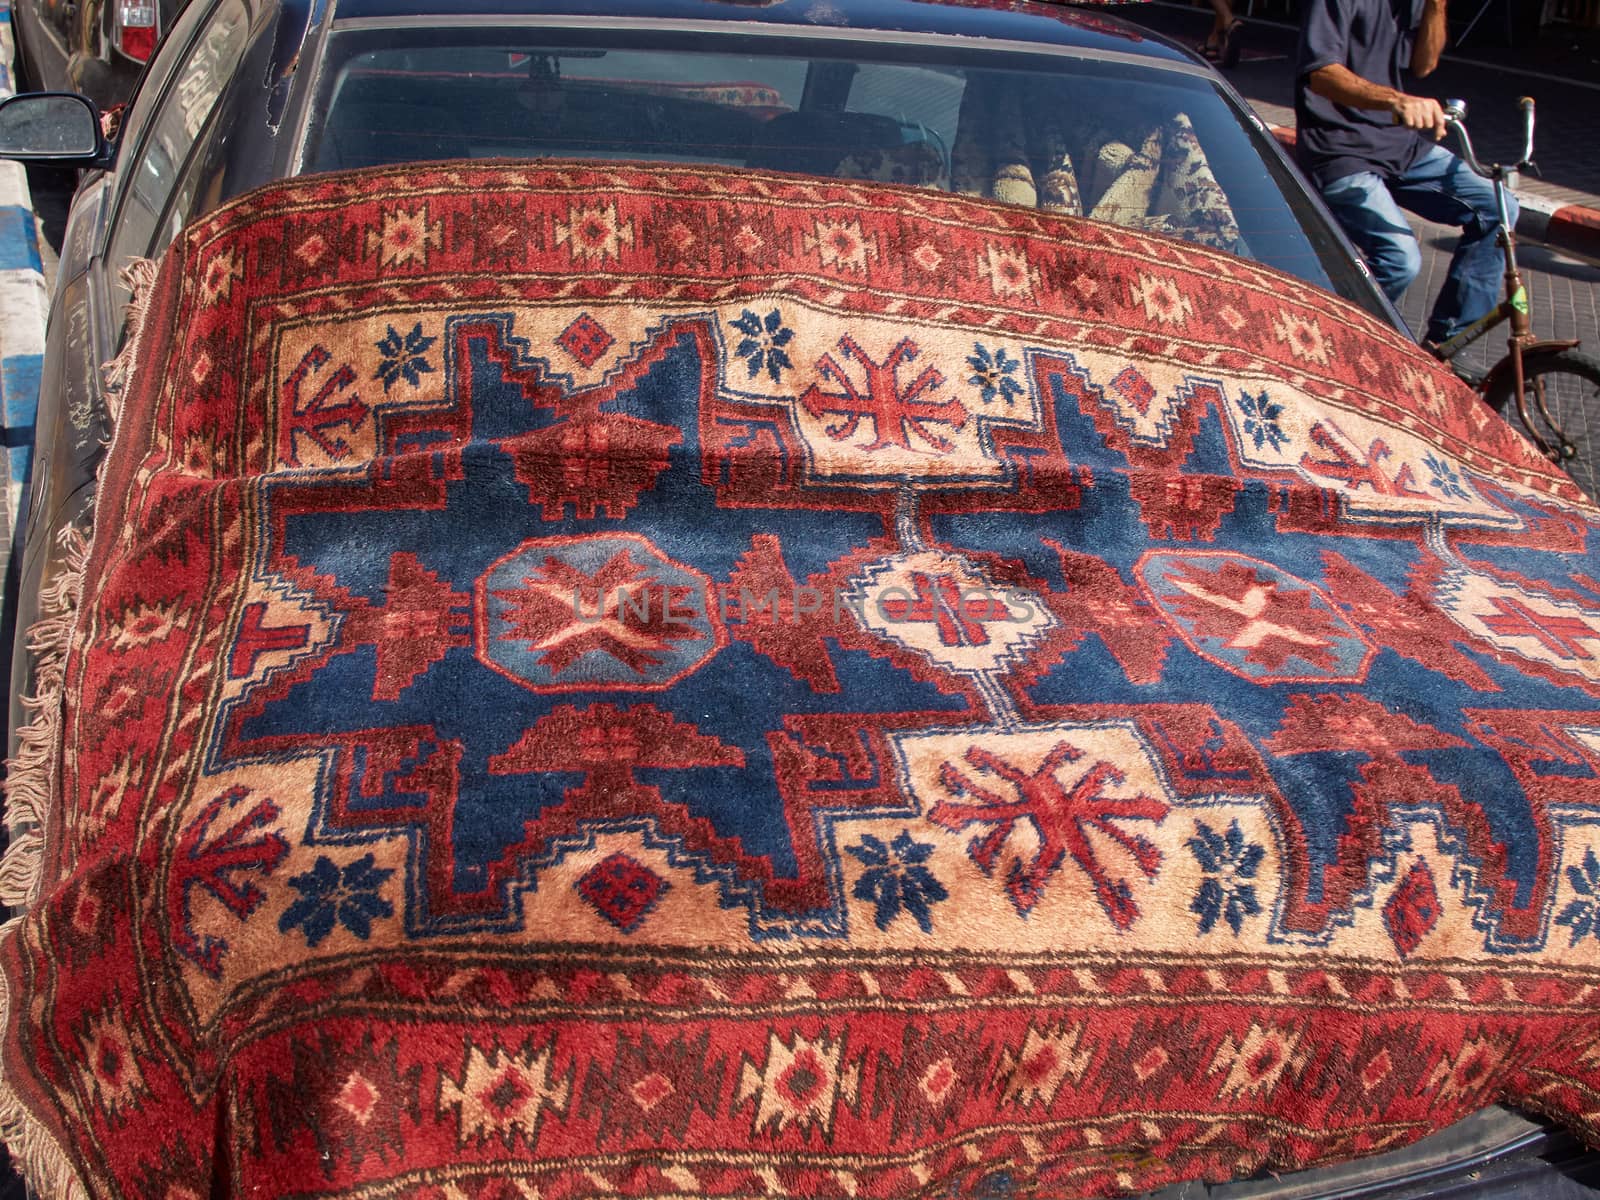 Oriental carpets in a flea market by Ronyzmbow